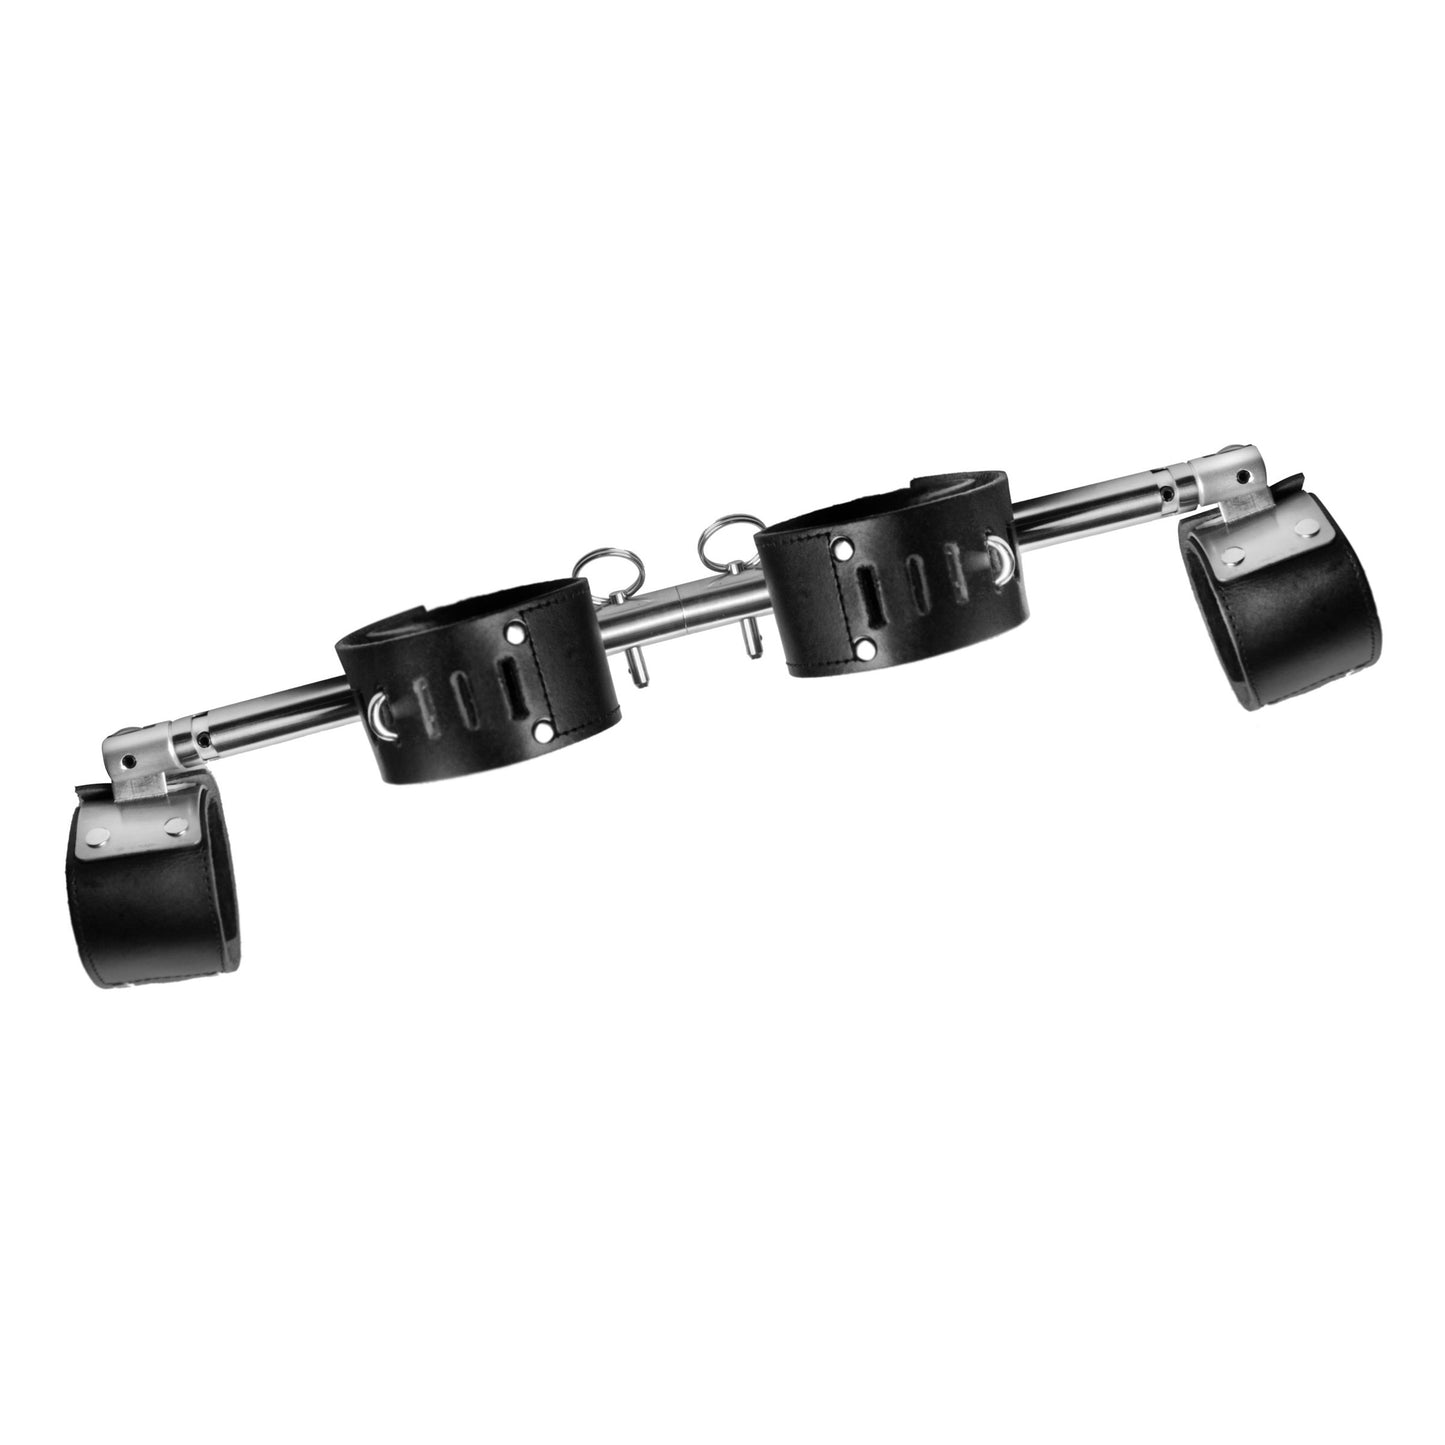 Adjustable Swiveling Spreader Bar with Leather Cuffs - UABDSM